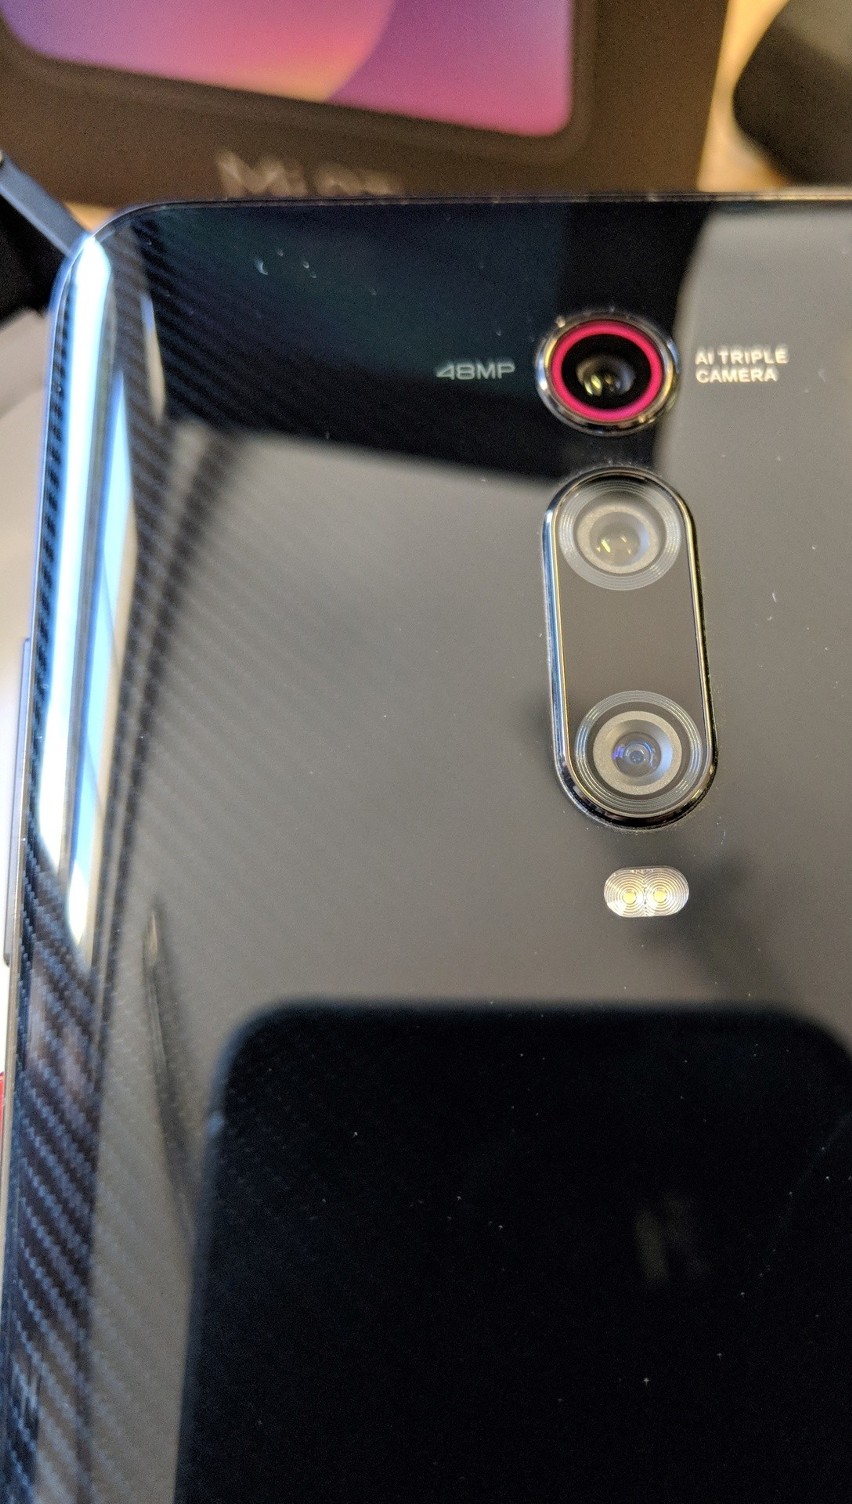 Smartfon Xiaomi Mi 9T - nasz test [FILM] - Laboratorium odc. 40